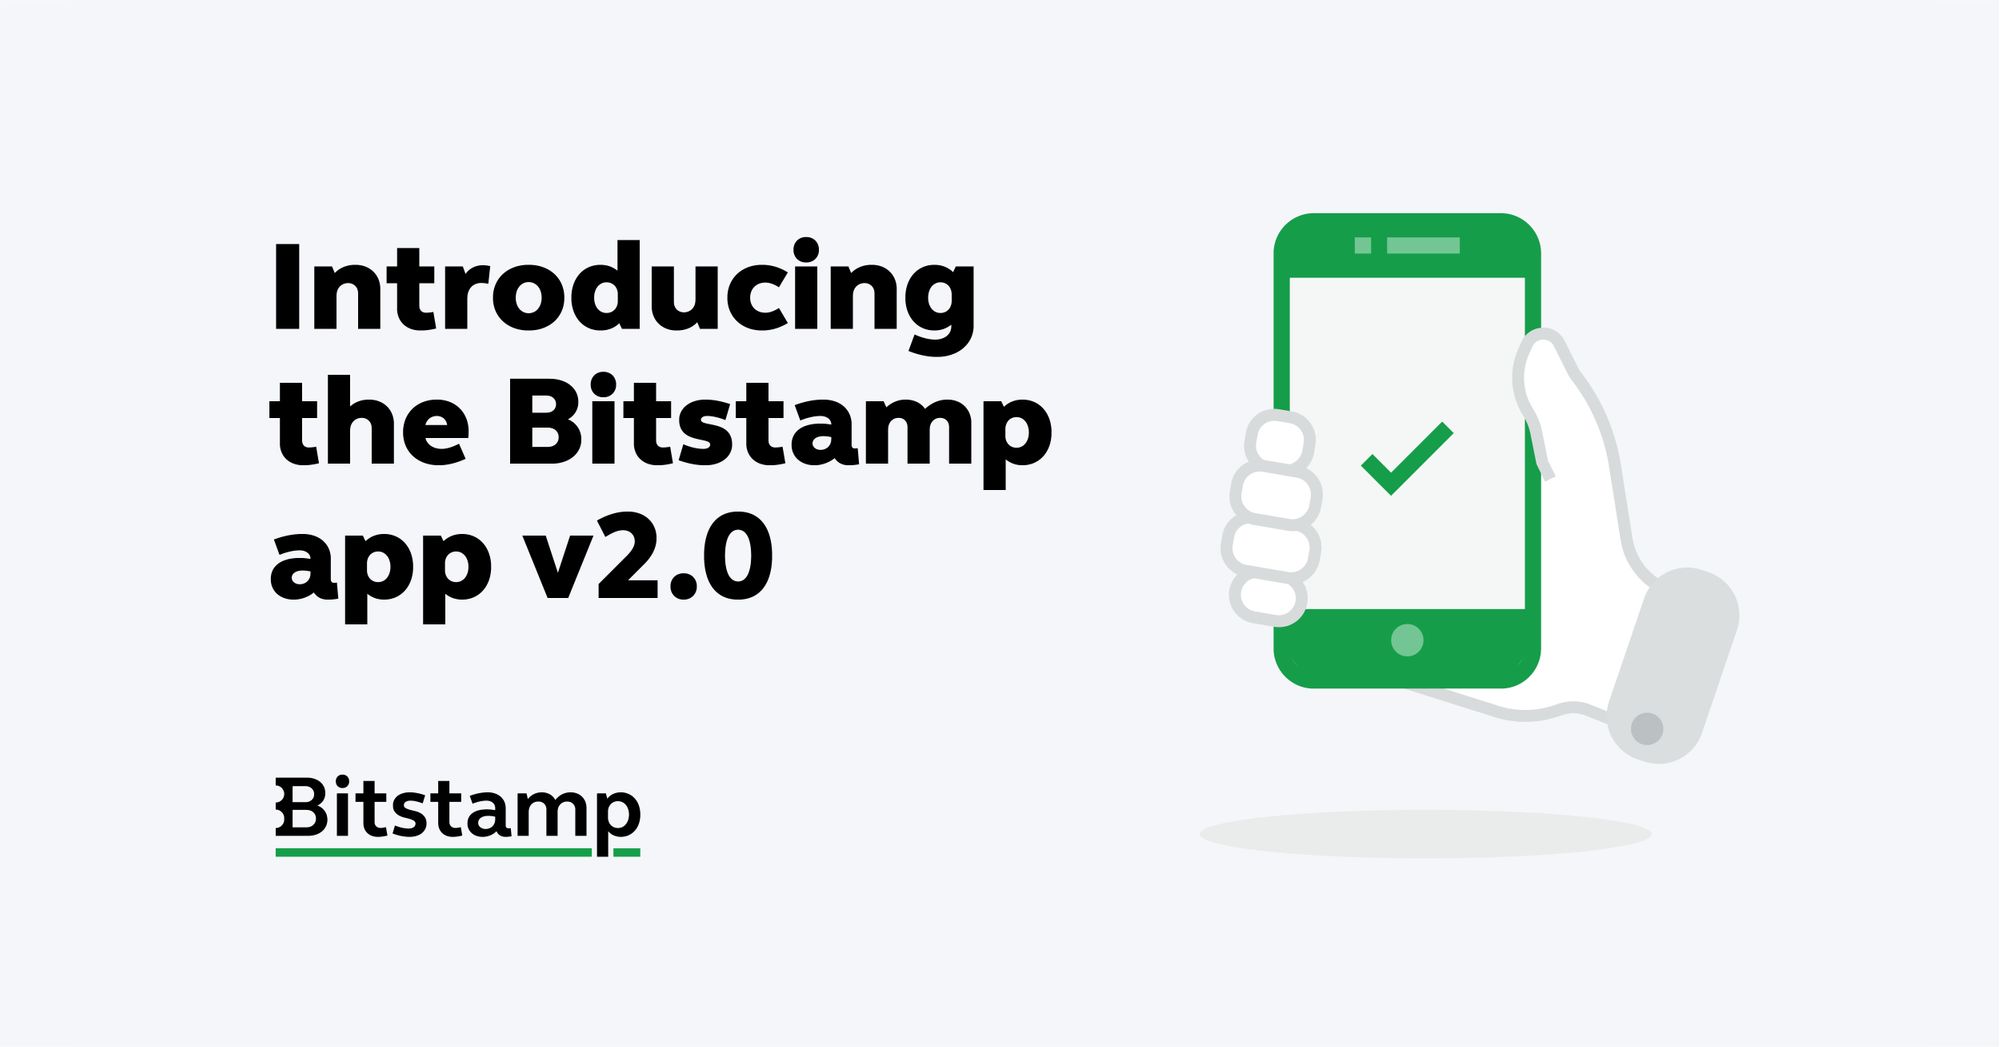 Introducing the Bitstamp app v2.0